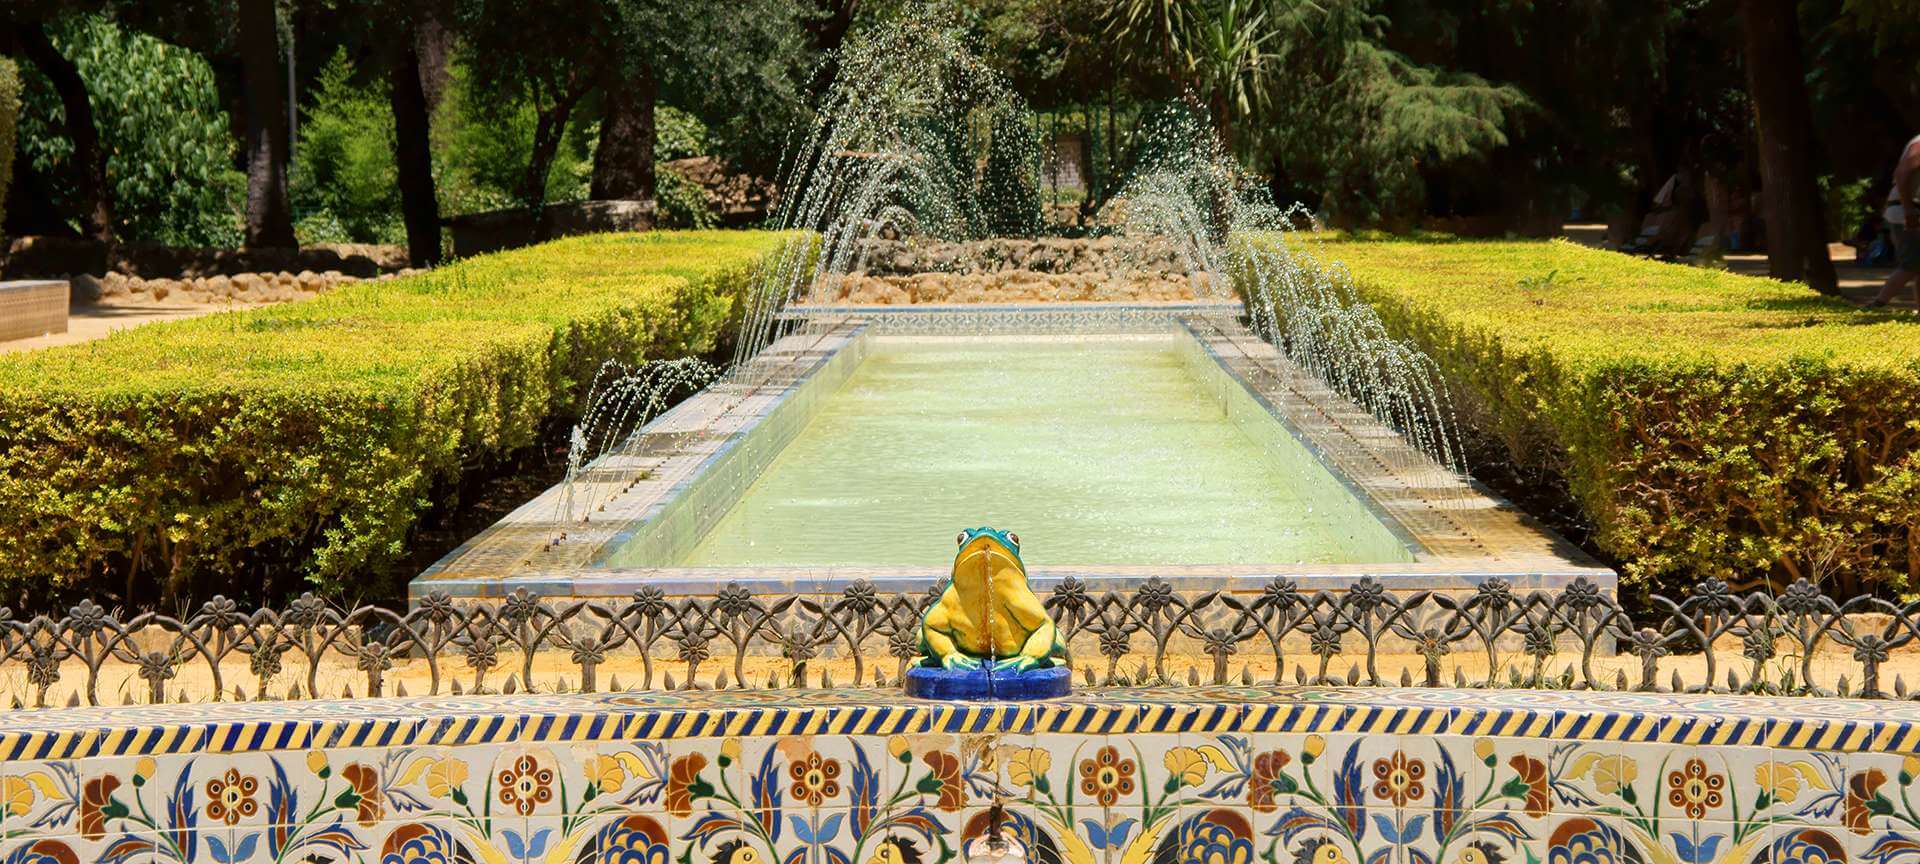 Pond in María Luisa Park, Seville